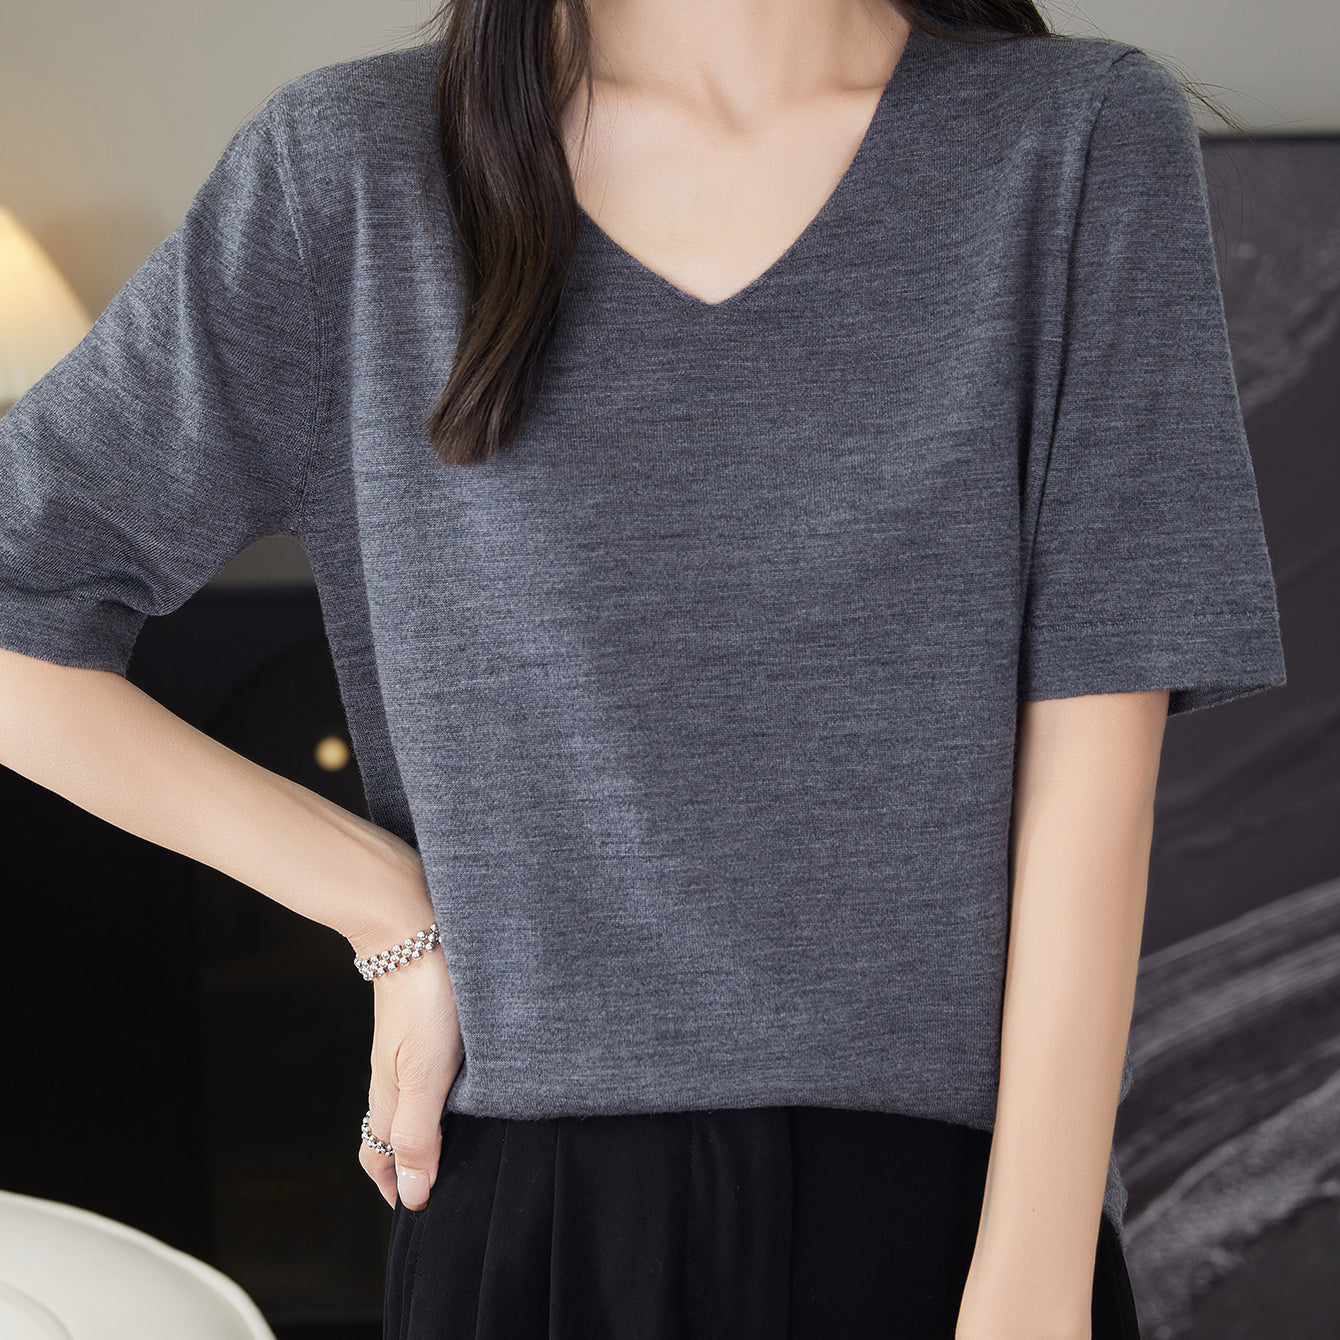 Chanyarn Women's 100% Merino Wool Base Layer Shirt Tops V Neck Short Sleeve Travel Hiking Tee T Shirt Pullover Sweater